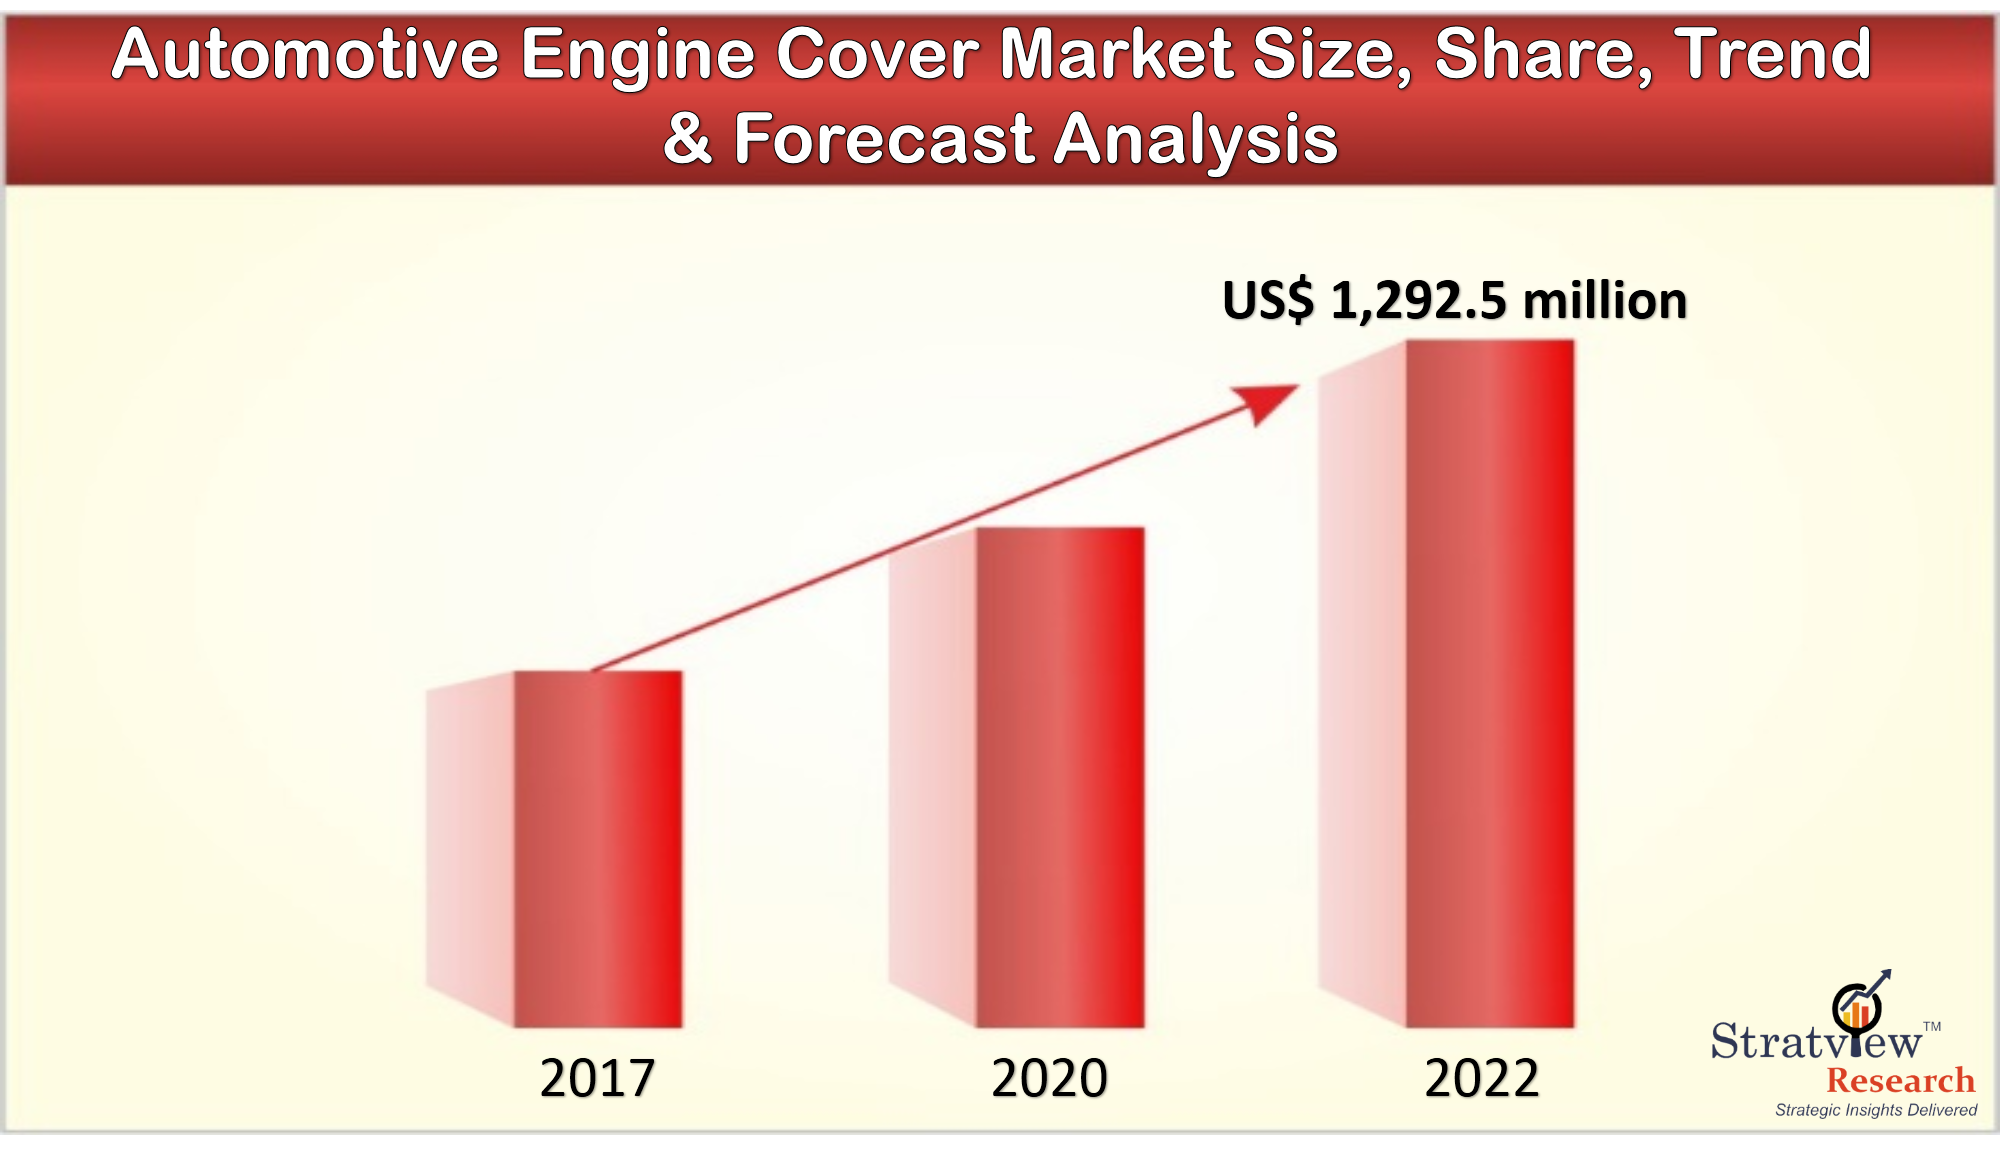 Automotive Engine Cover Market set to reach US$ 1,292.5 million by 2022